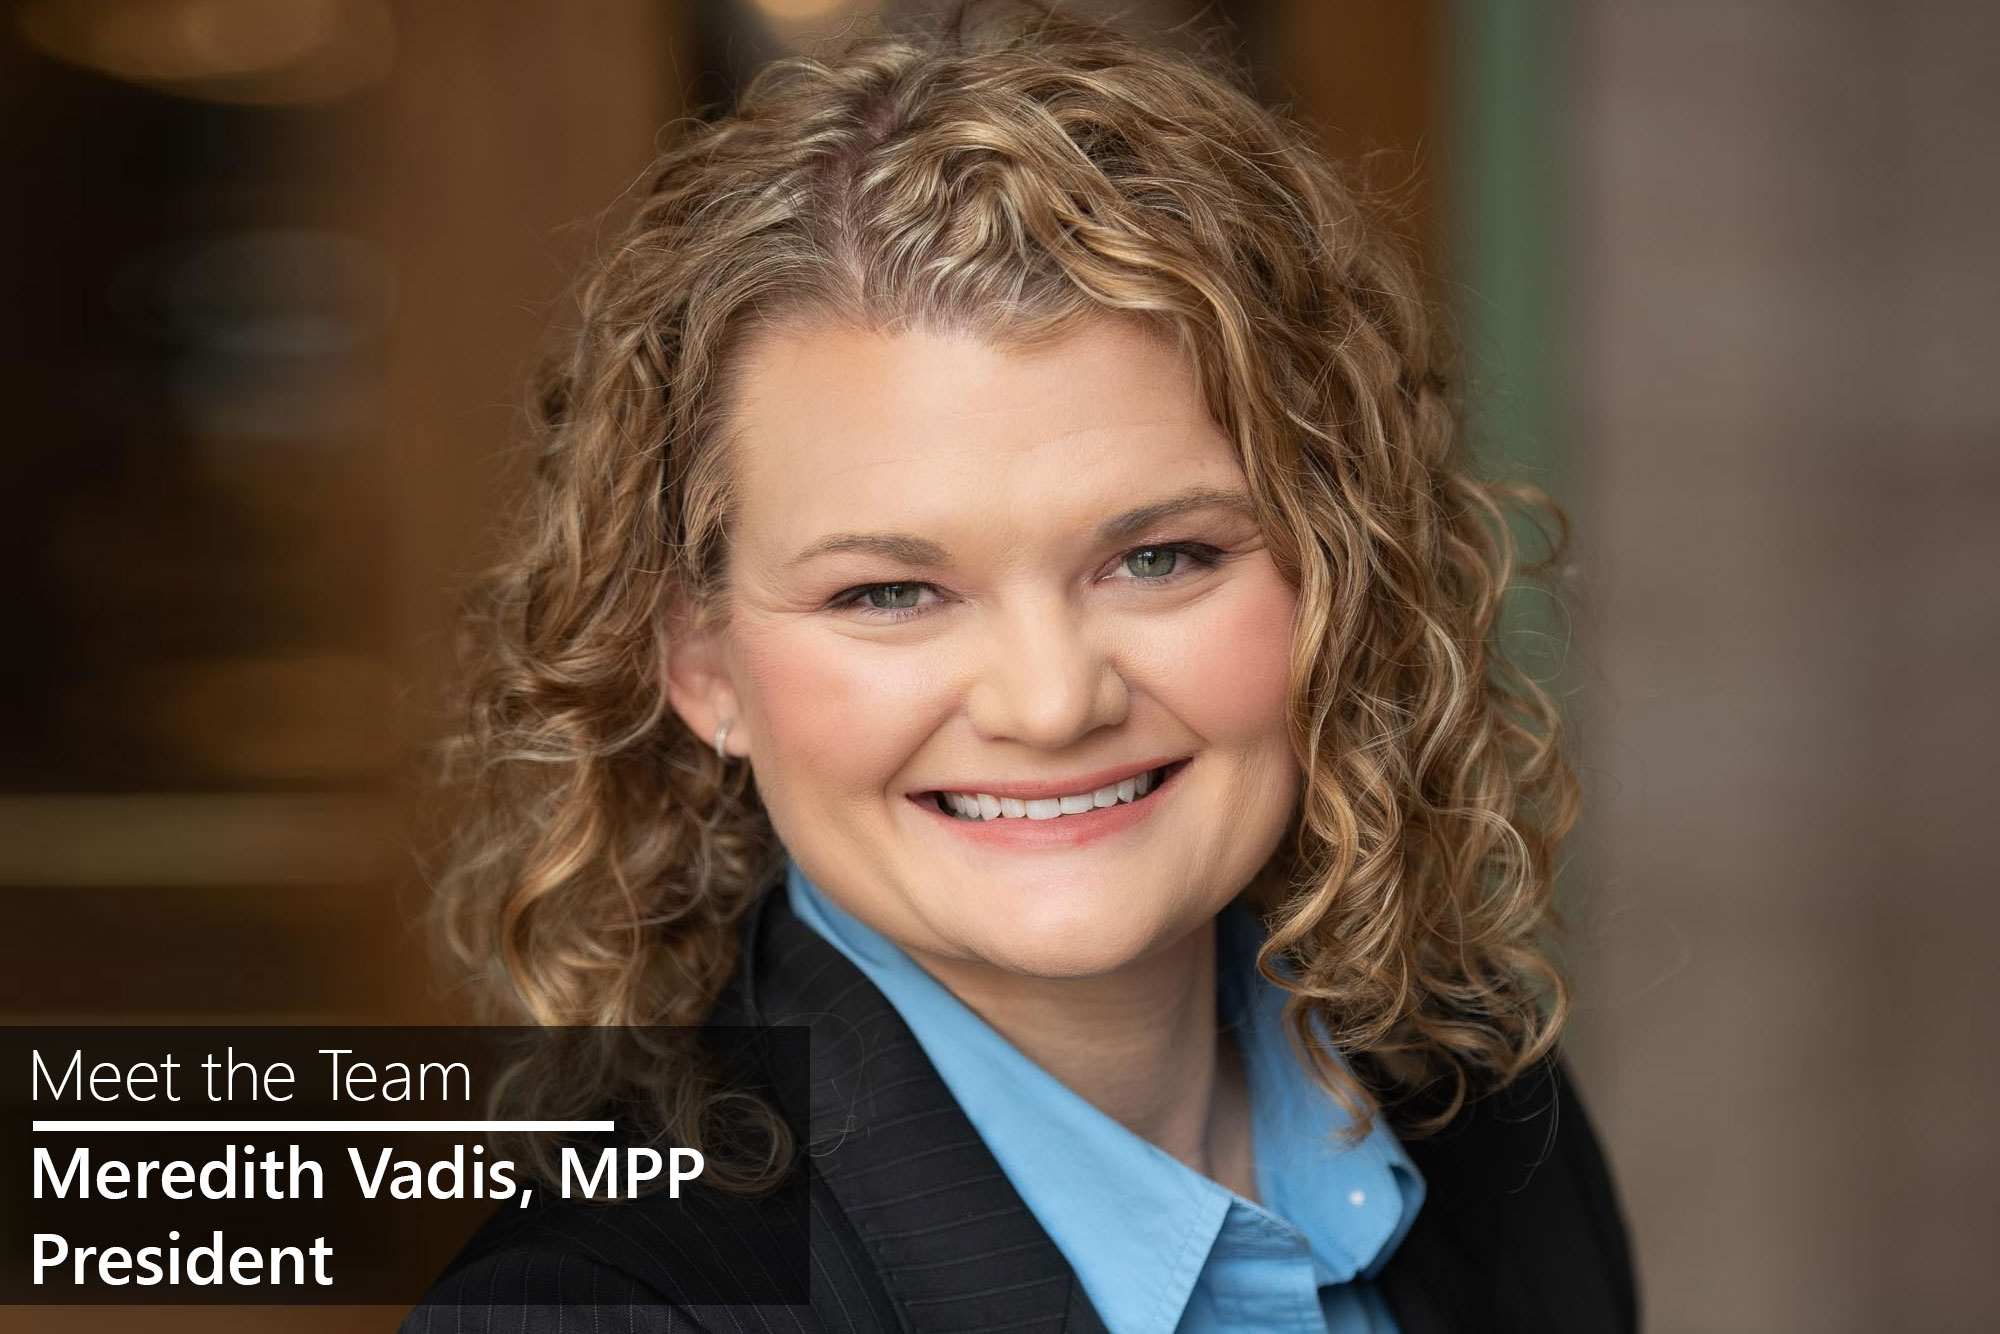 Meet the Team - Meredith Vadis